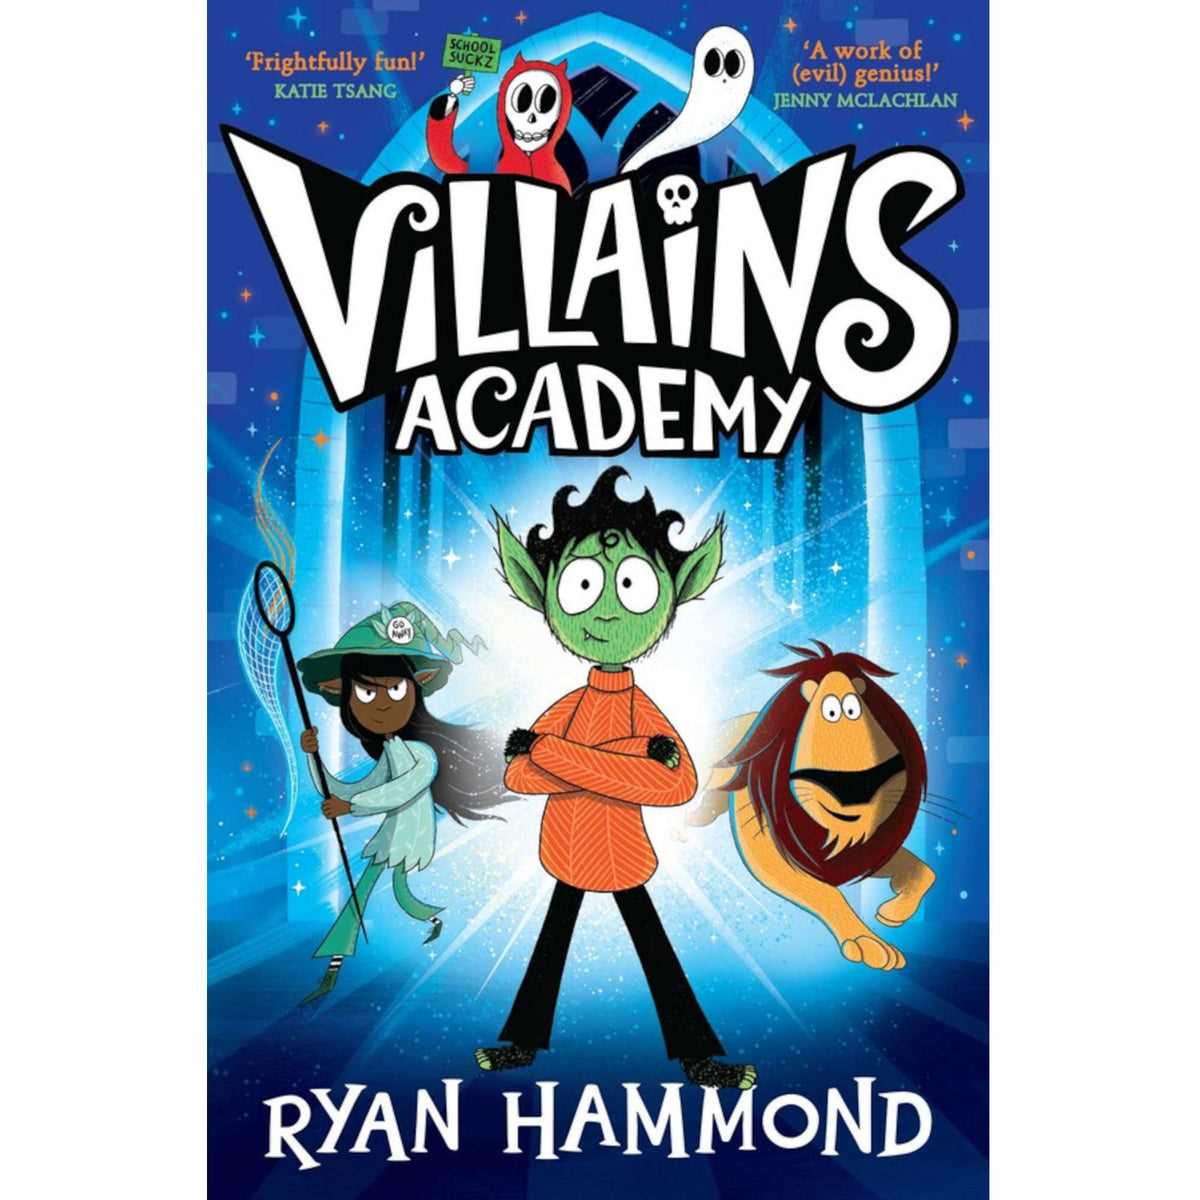 Villains Academy